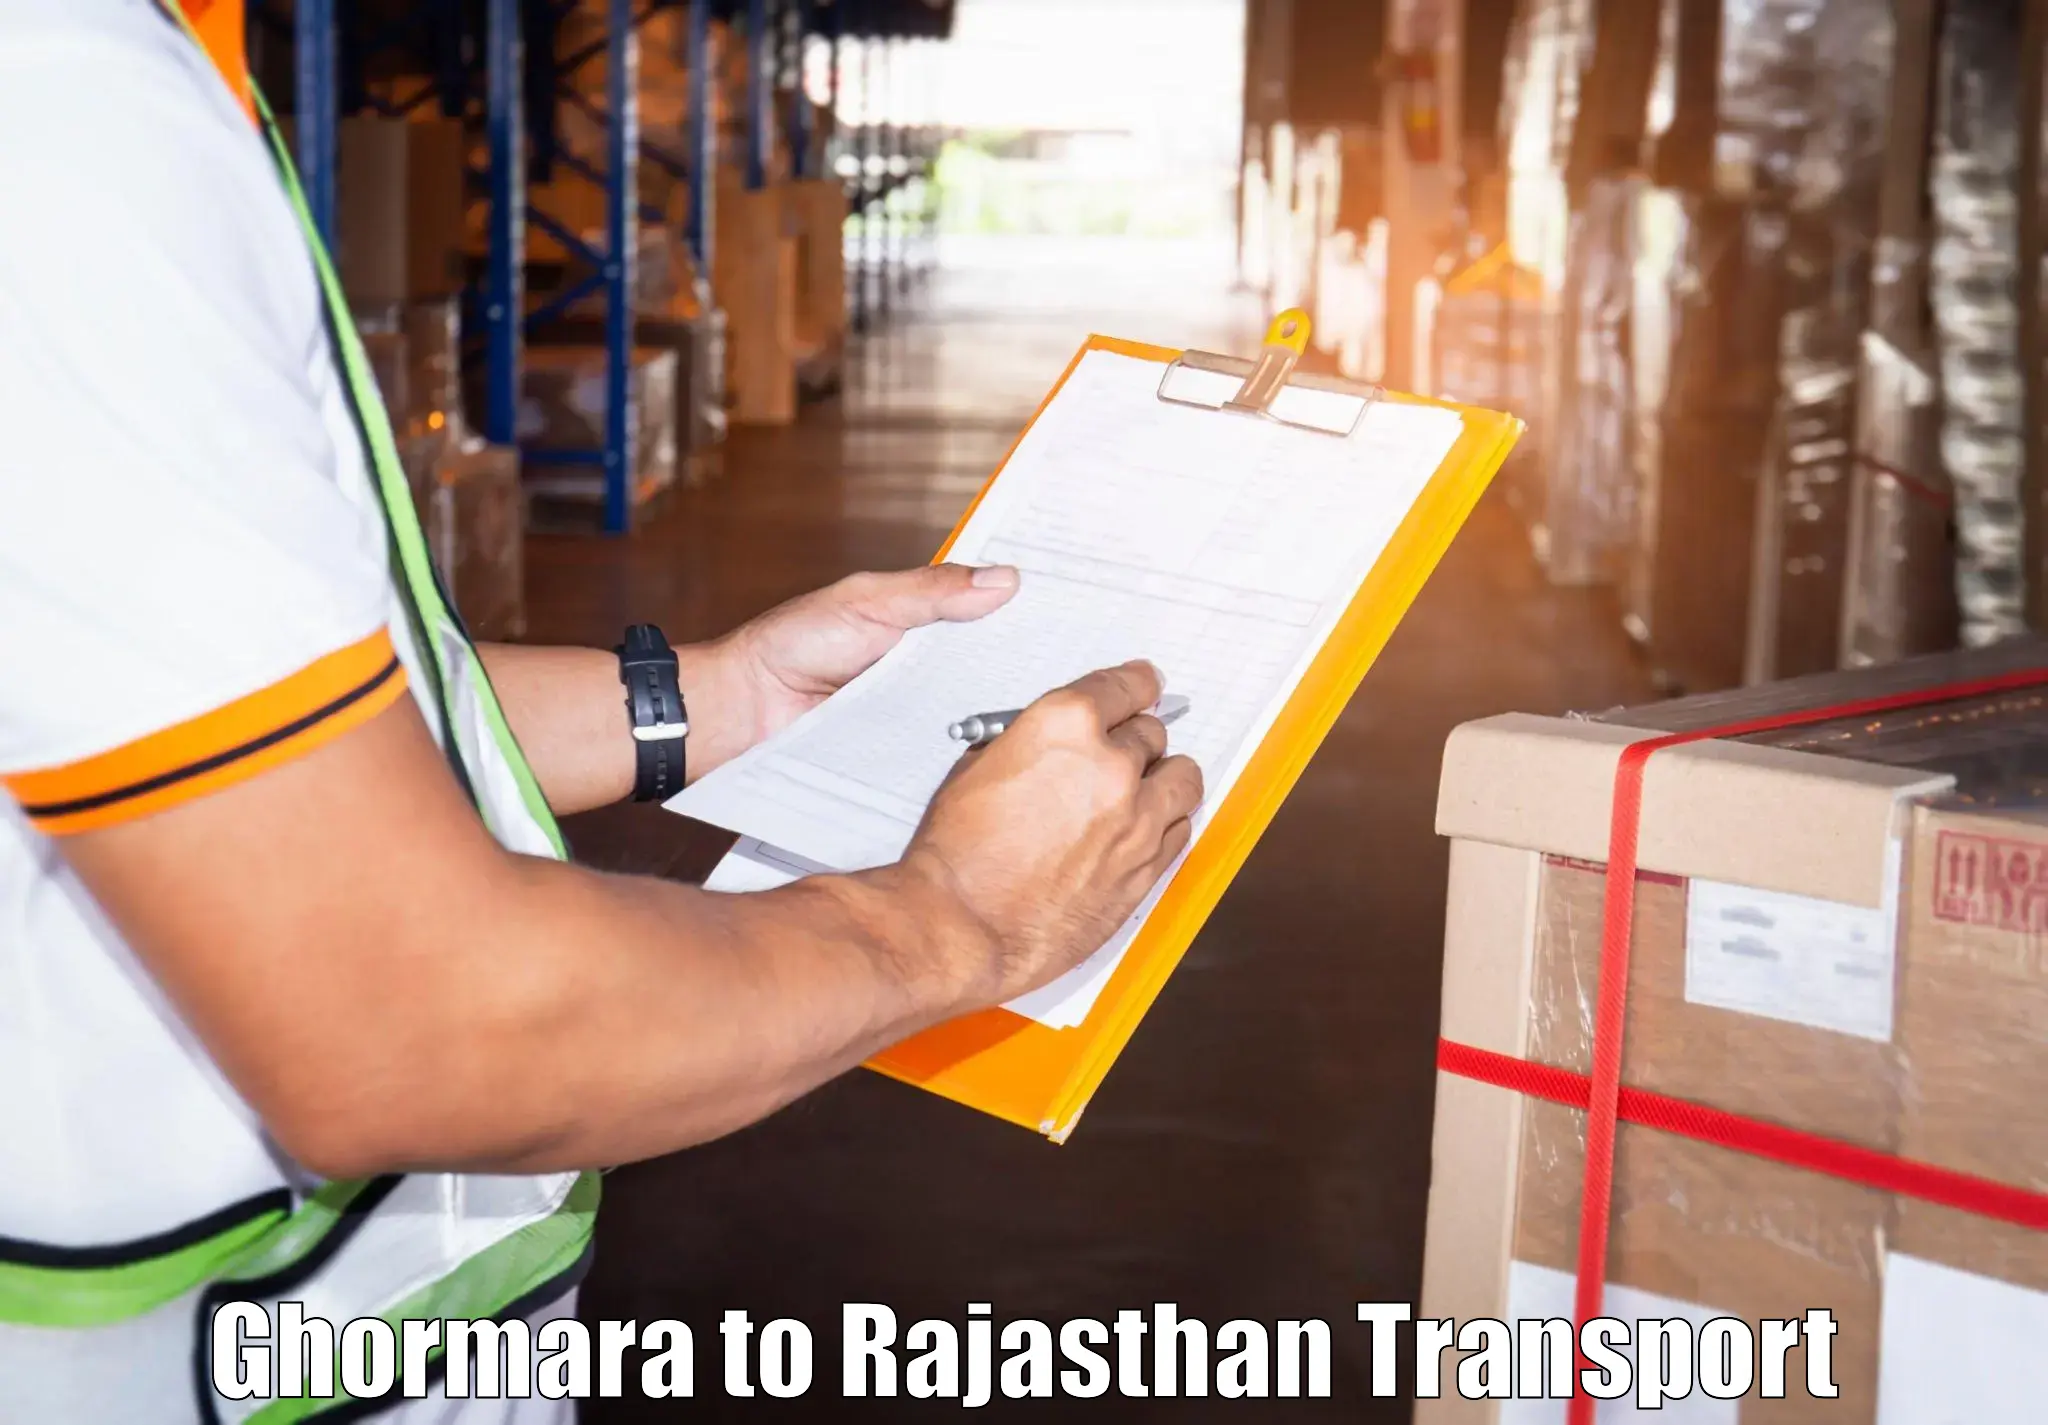 Truck transport companies in India Ghormara to Shrimadhopur